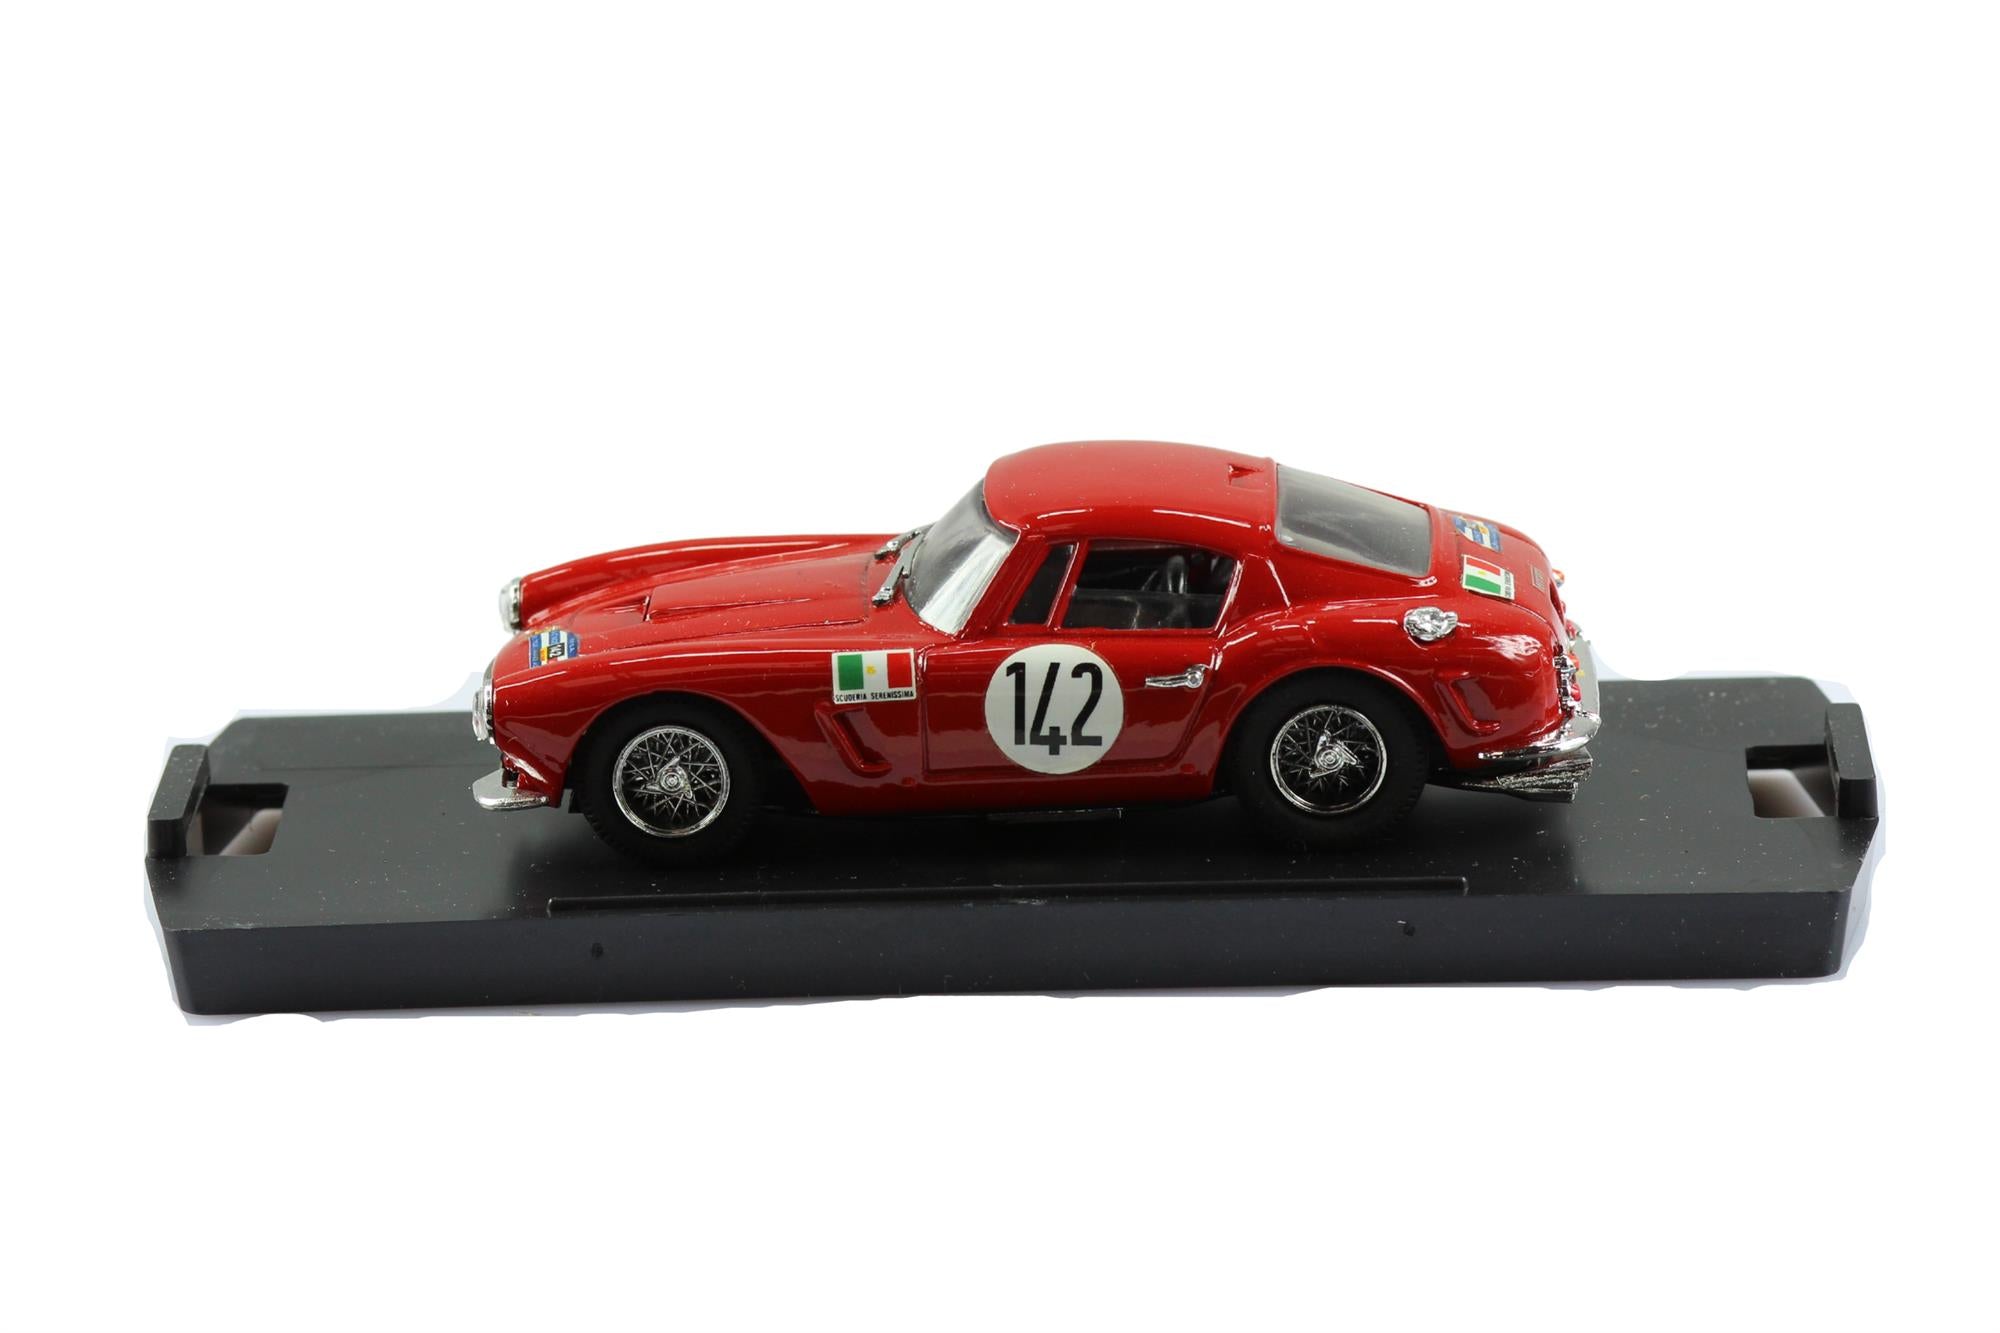 Bang Models - 1:43 Scale Diecast Ferrari 250 SWB "Tour De France 1961" Red - Toptoys2u